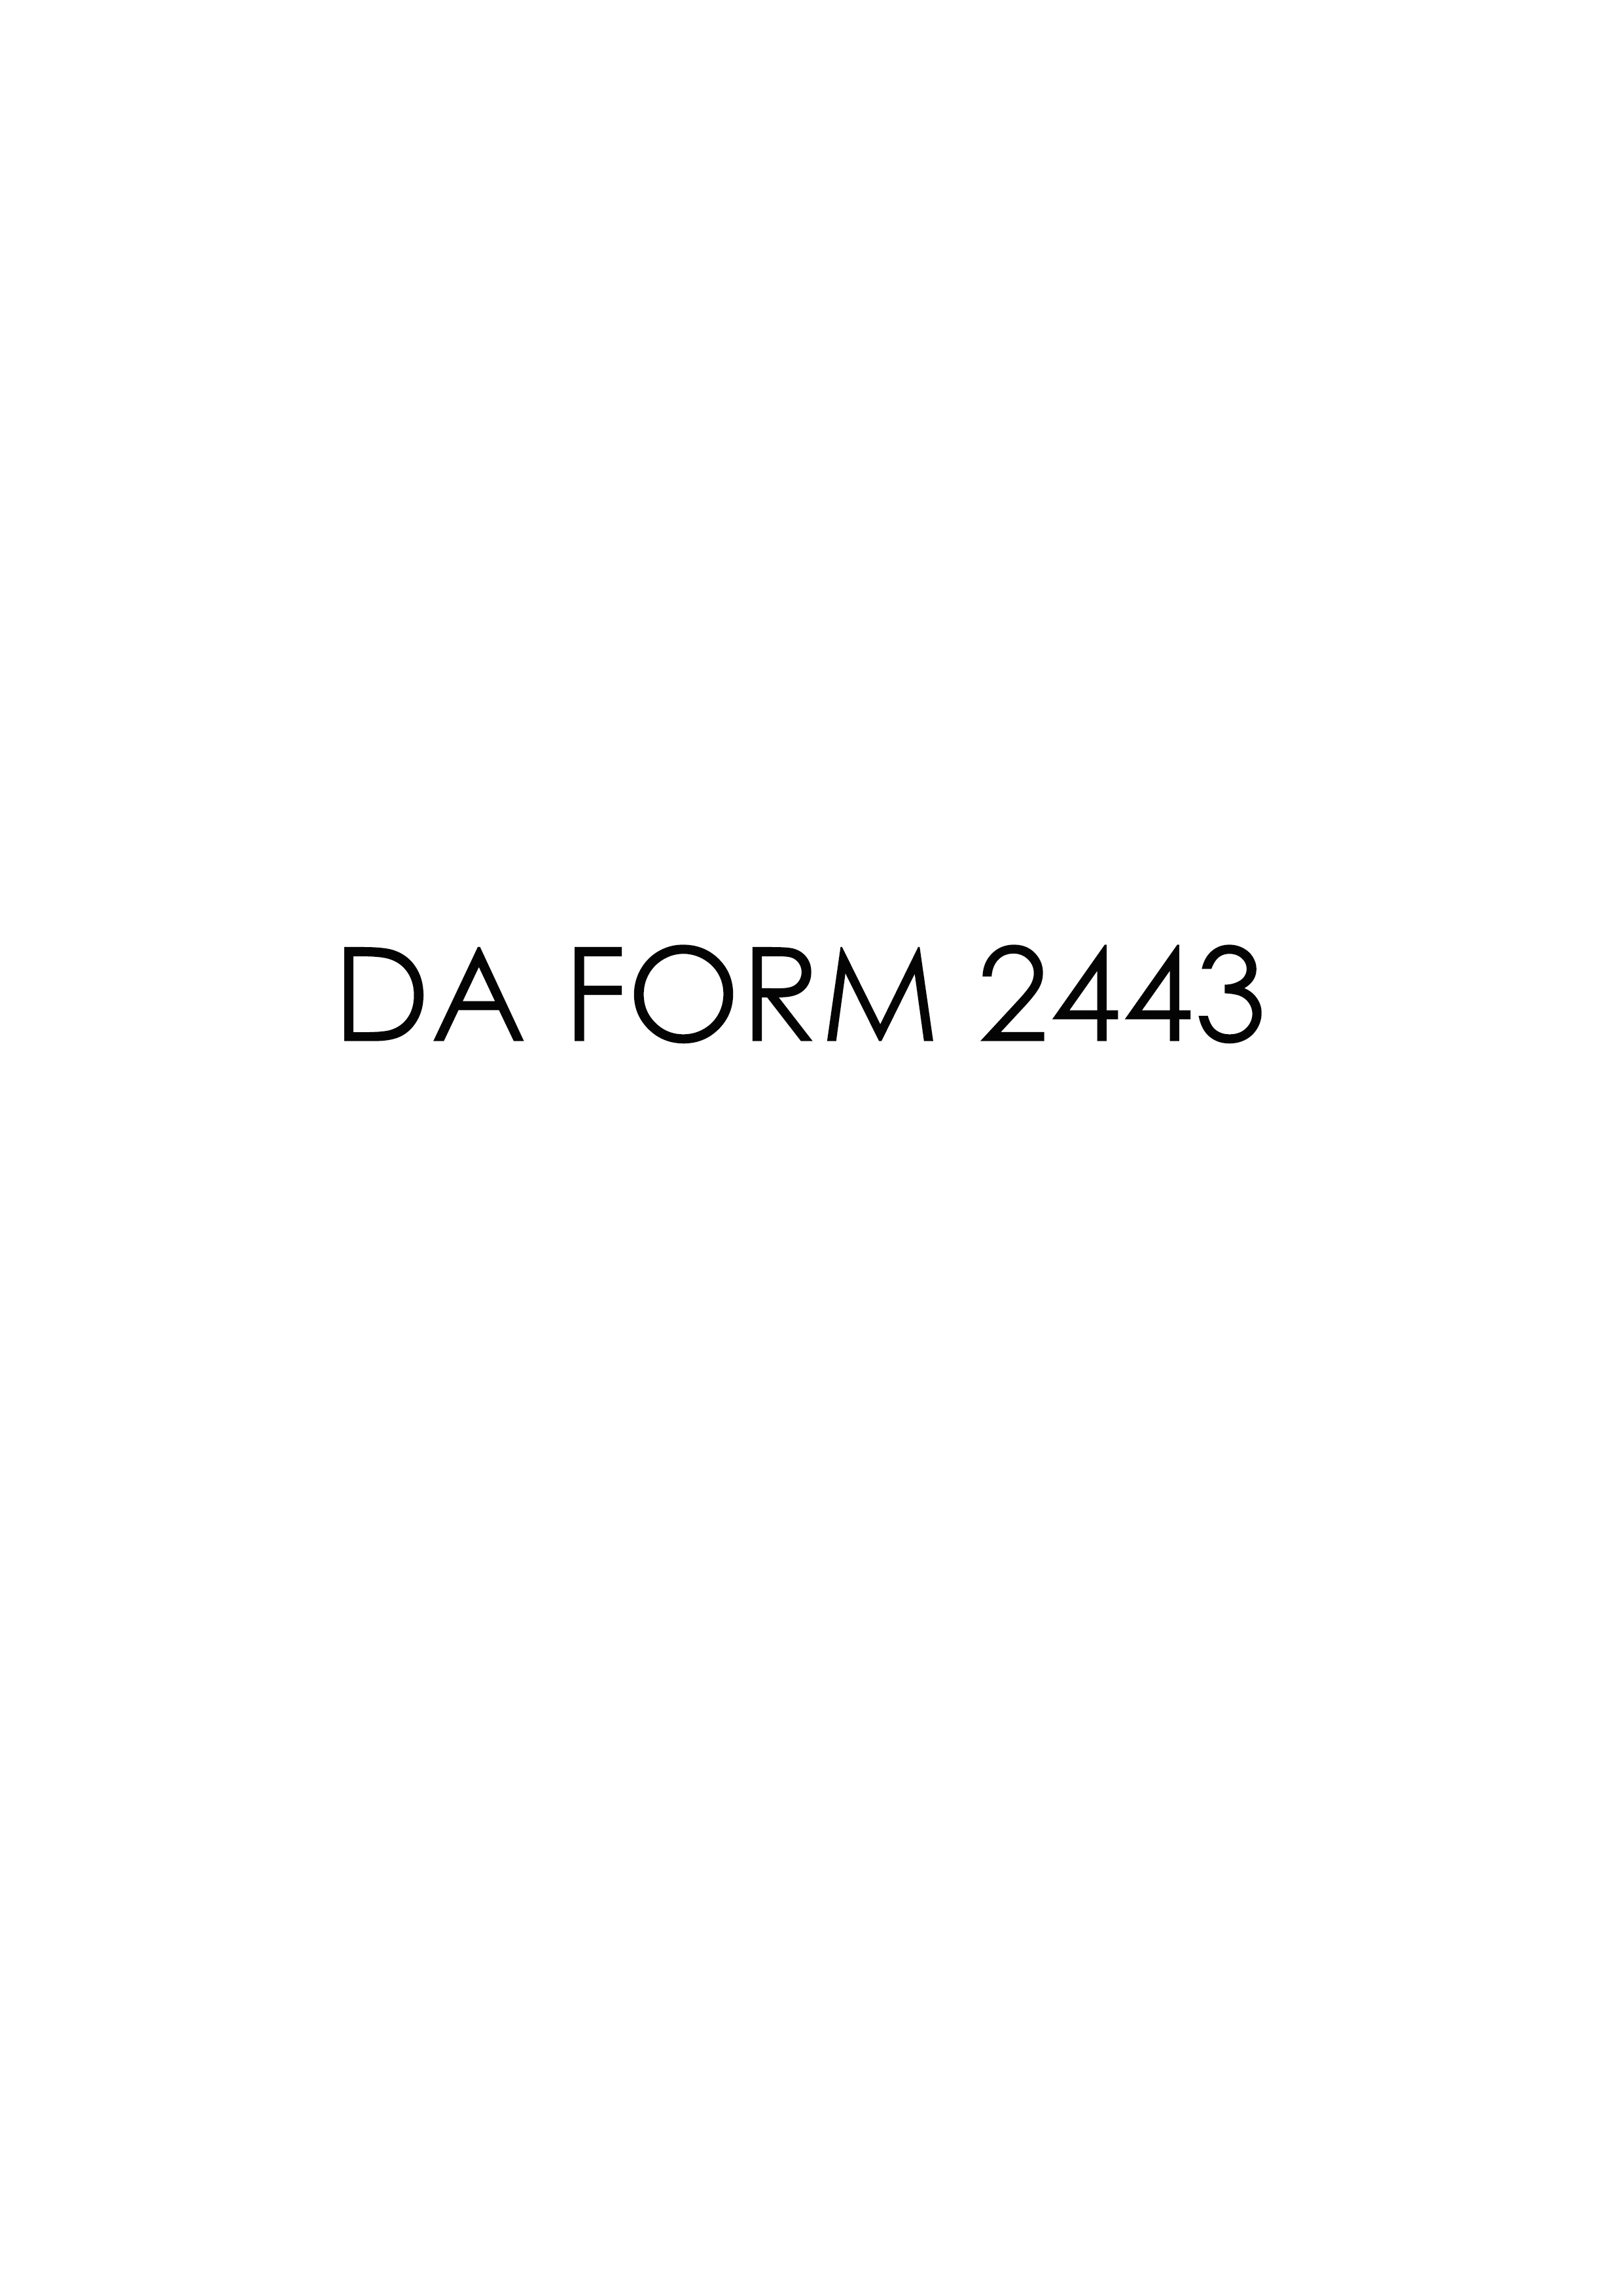 Download da 2443 Form